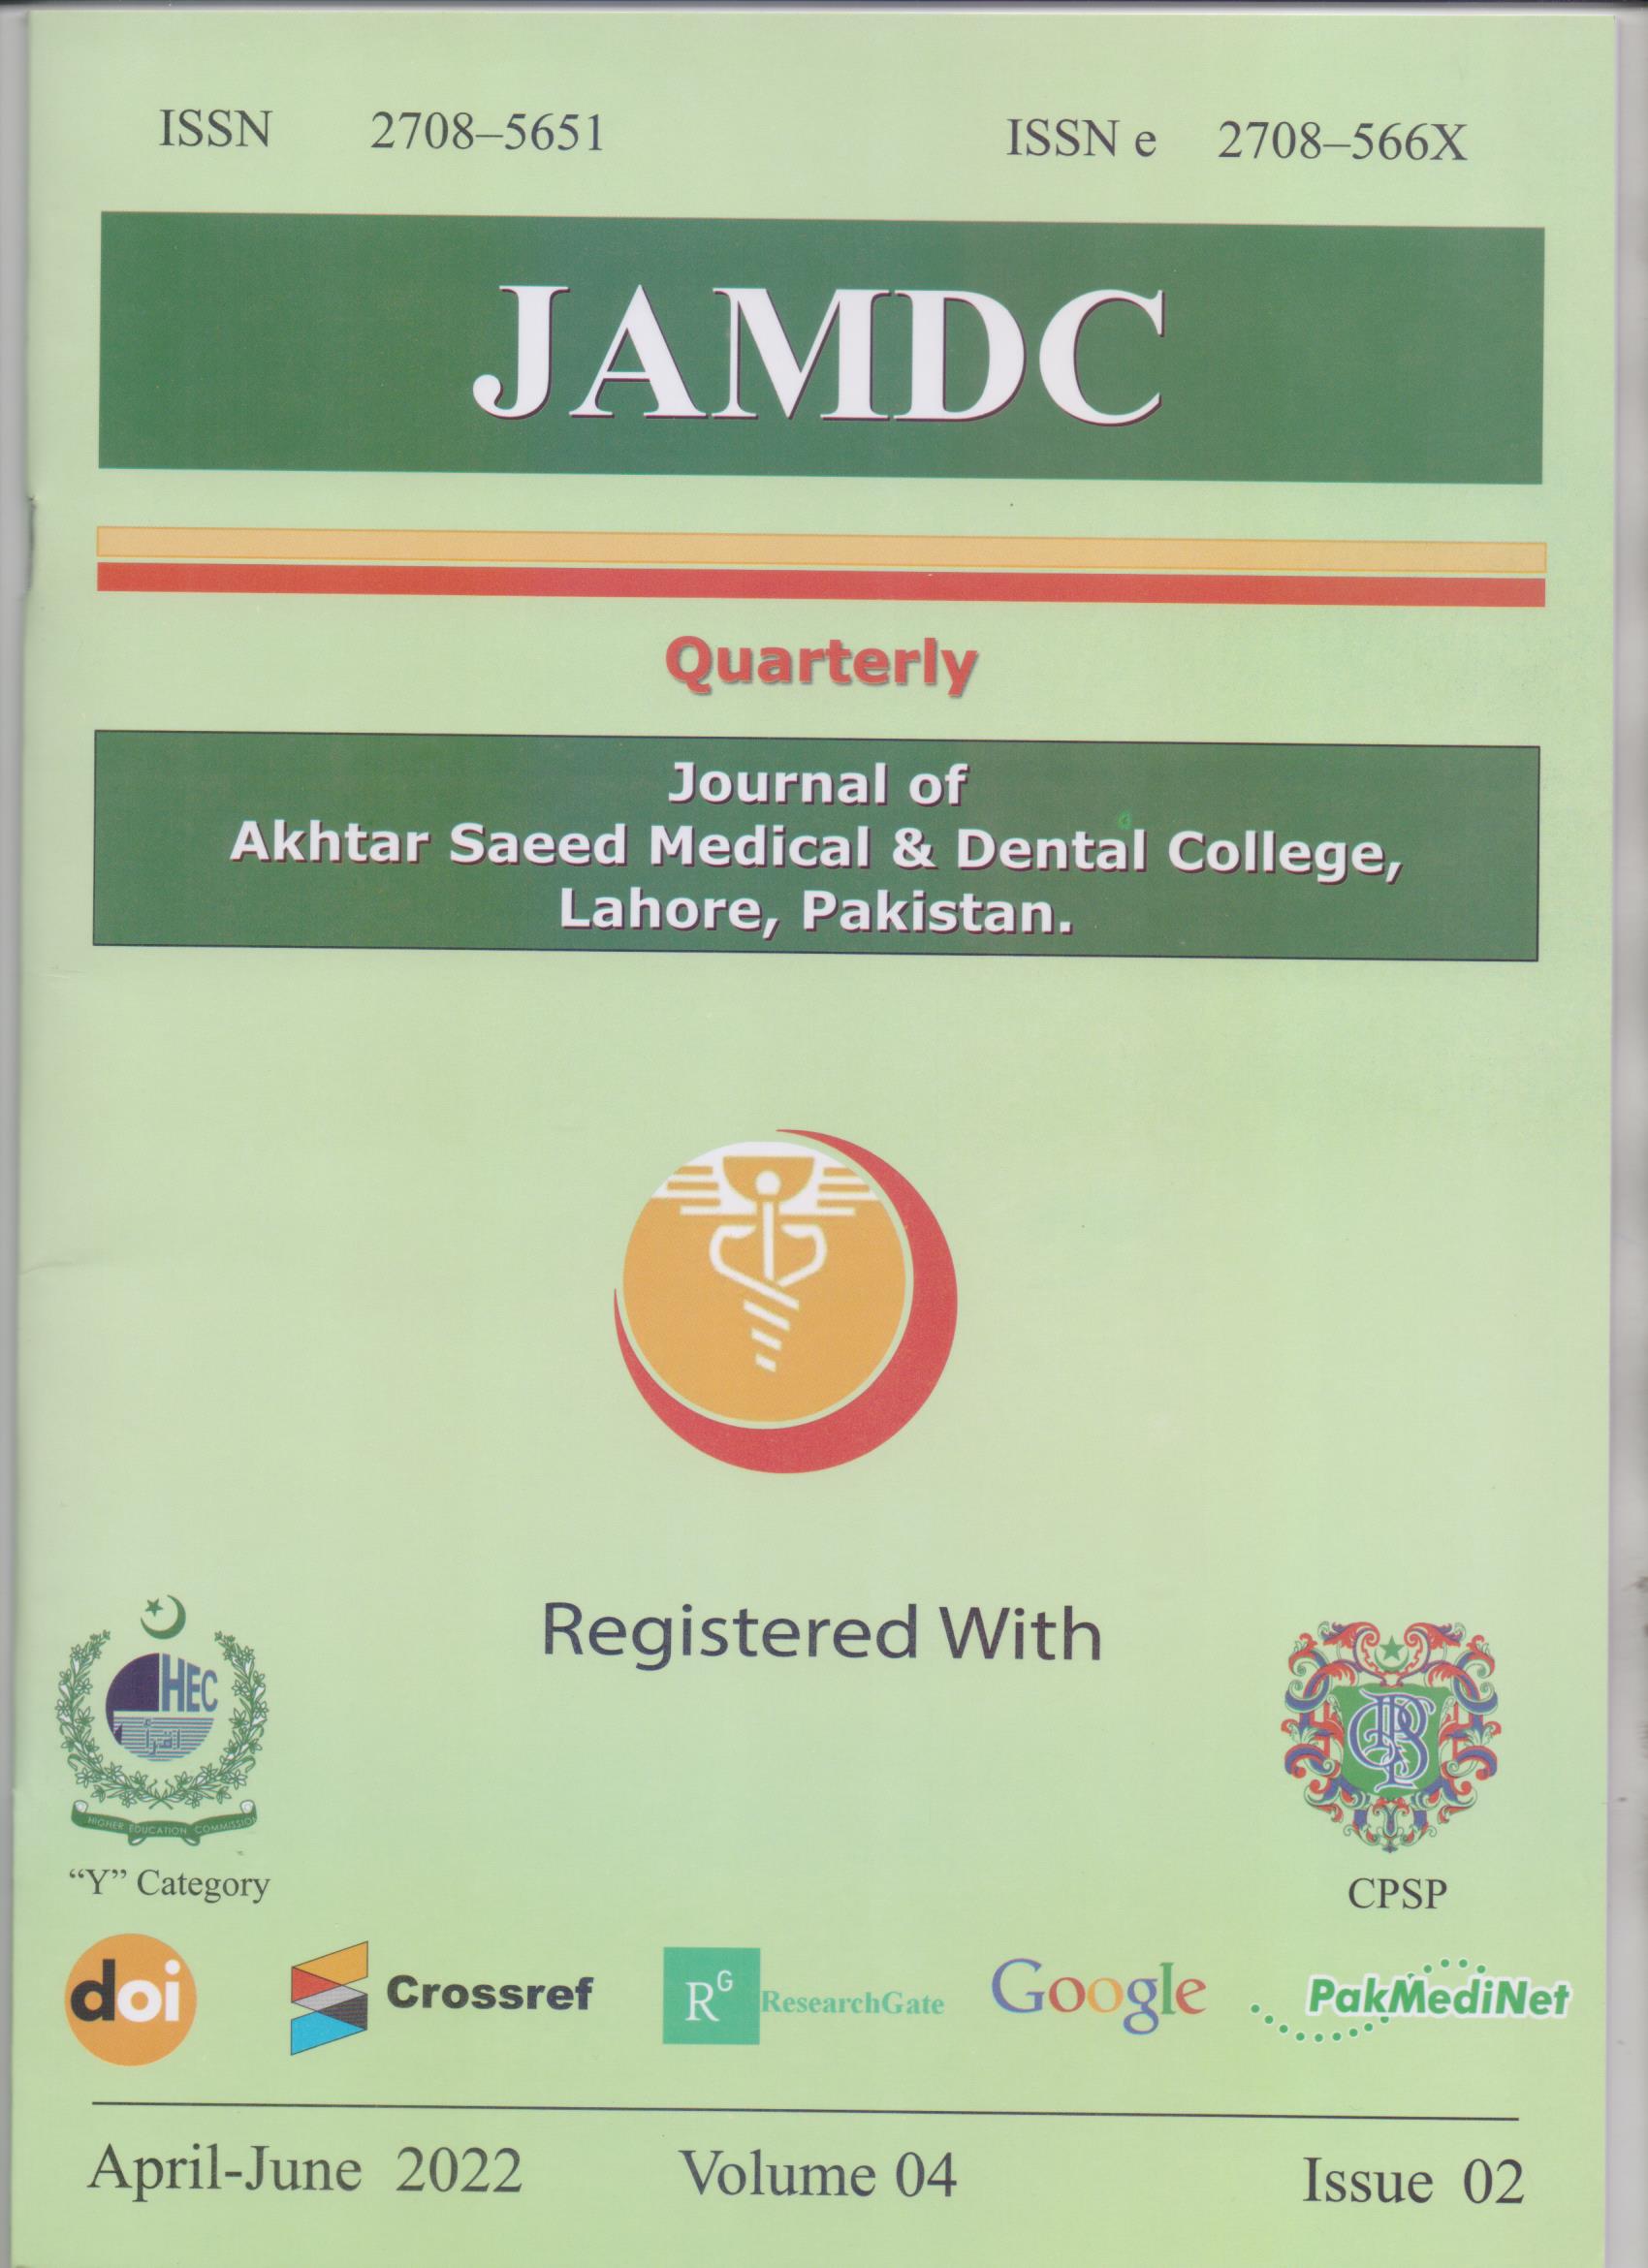 Journal of Akhtar Saeed Medical & Dental College